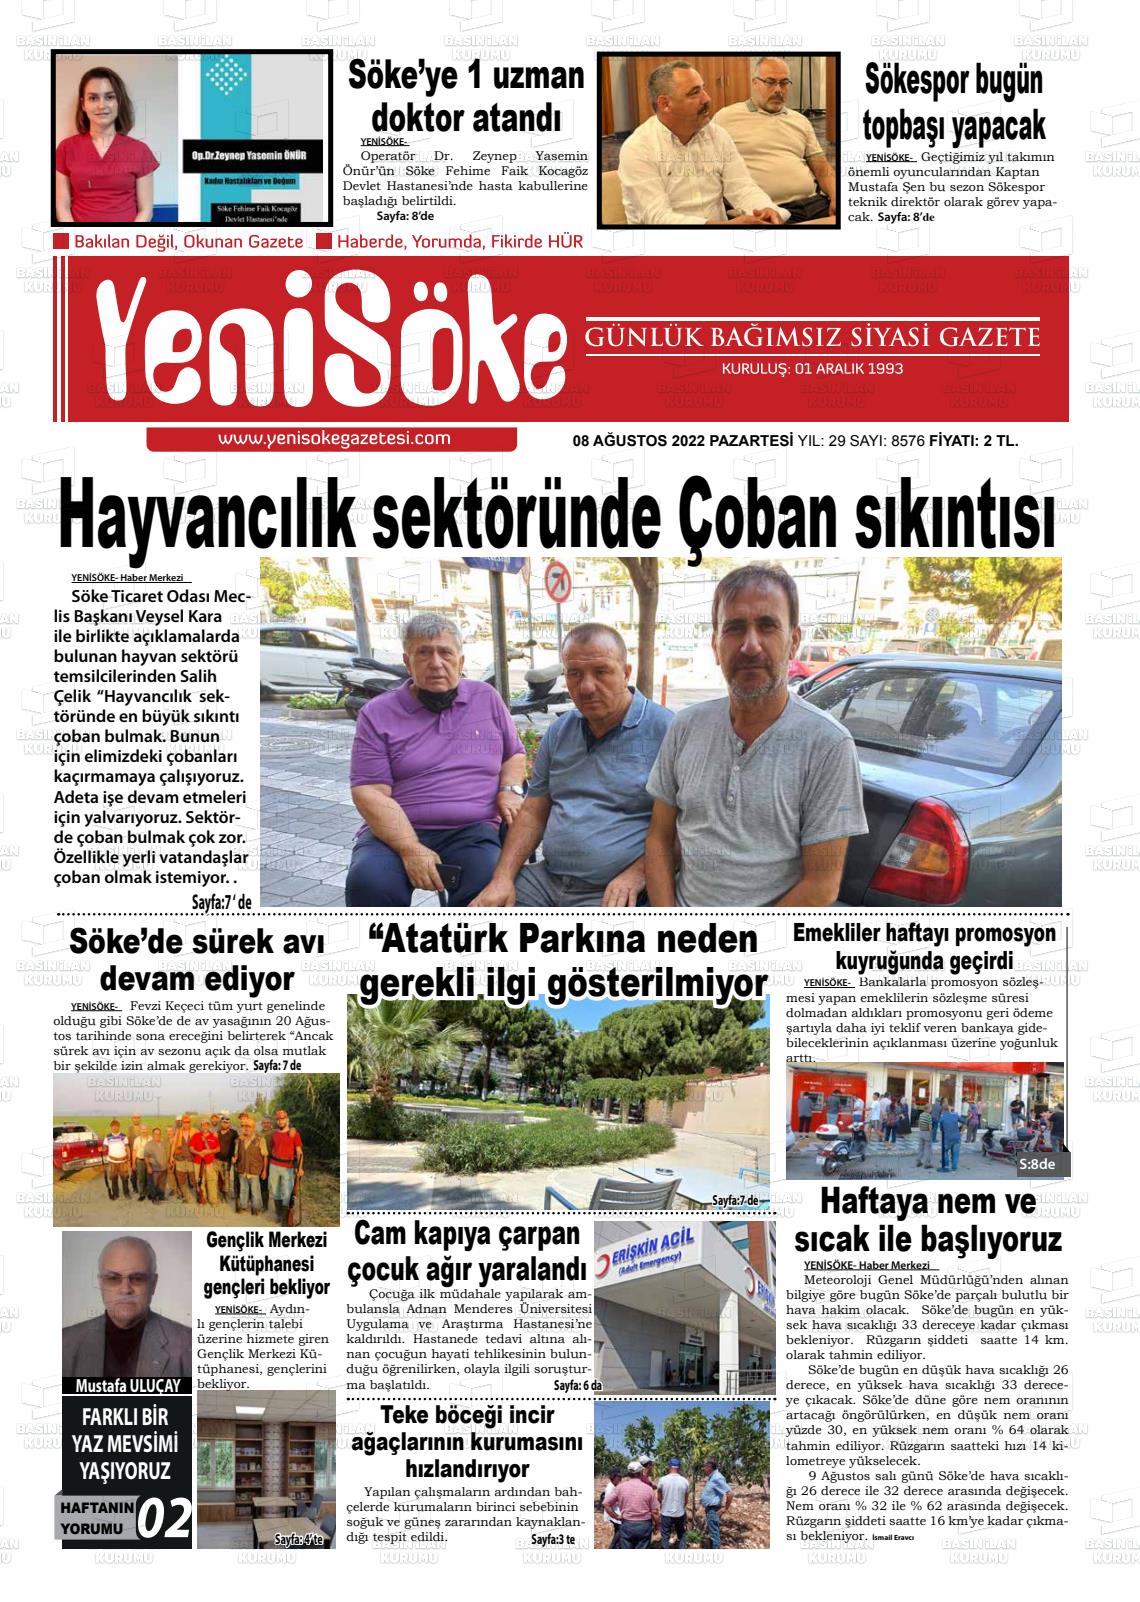 08 Ağustos 2022 Yeni Söke Gazete Manşeti